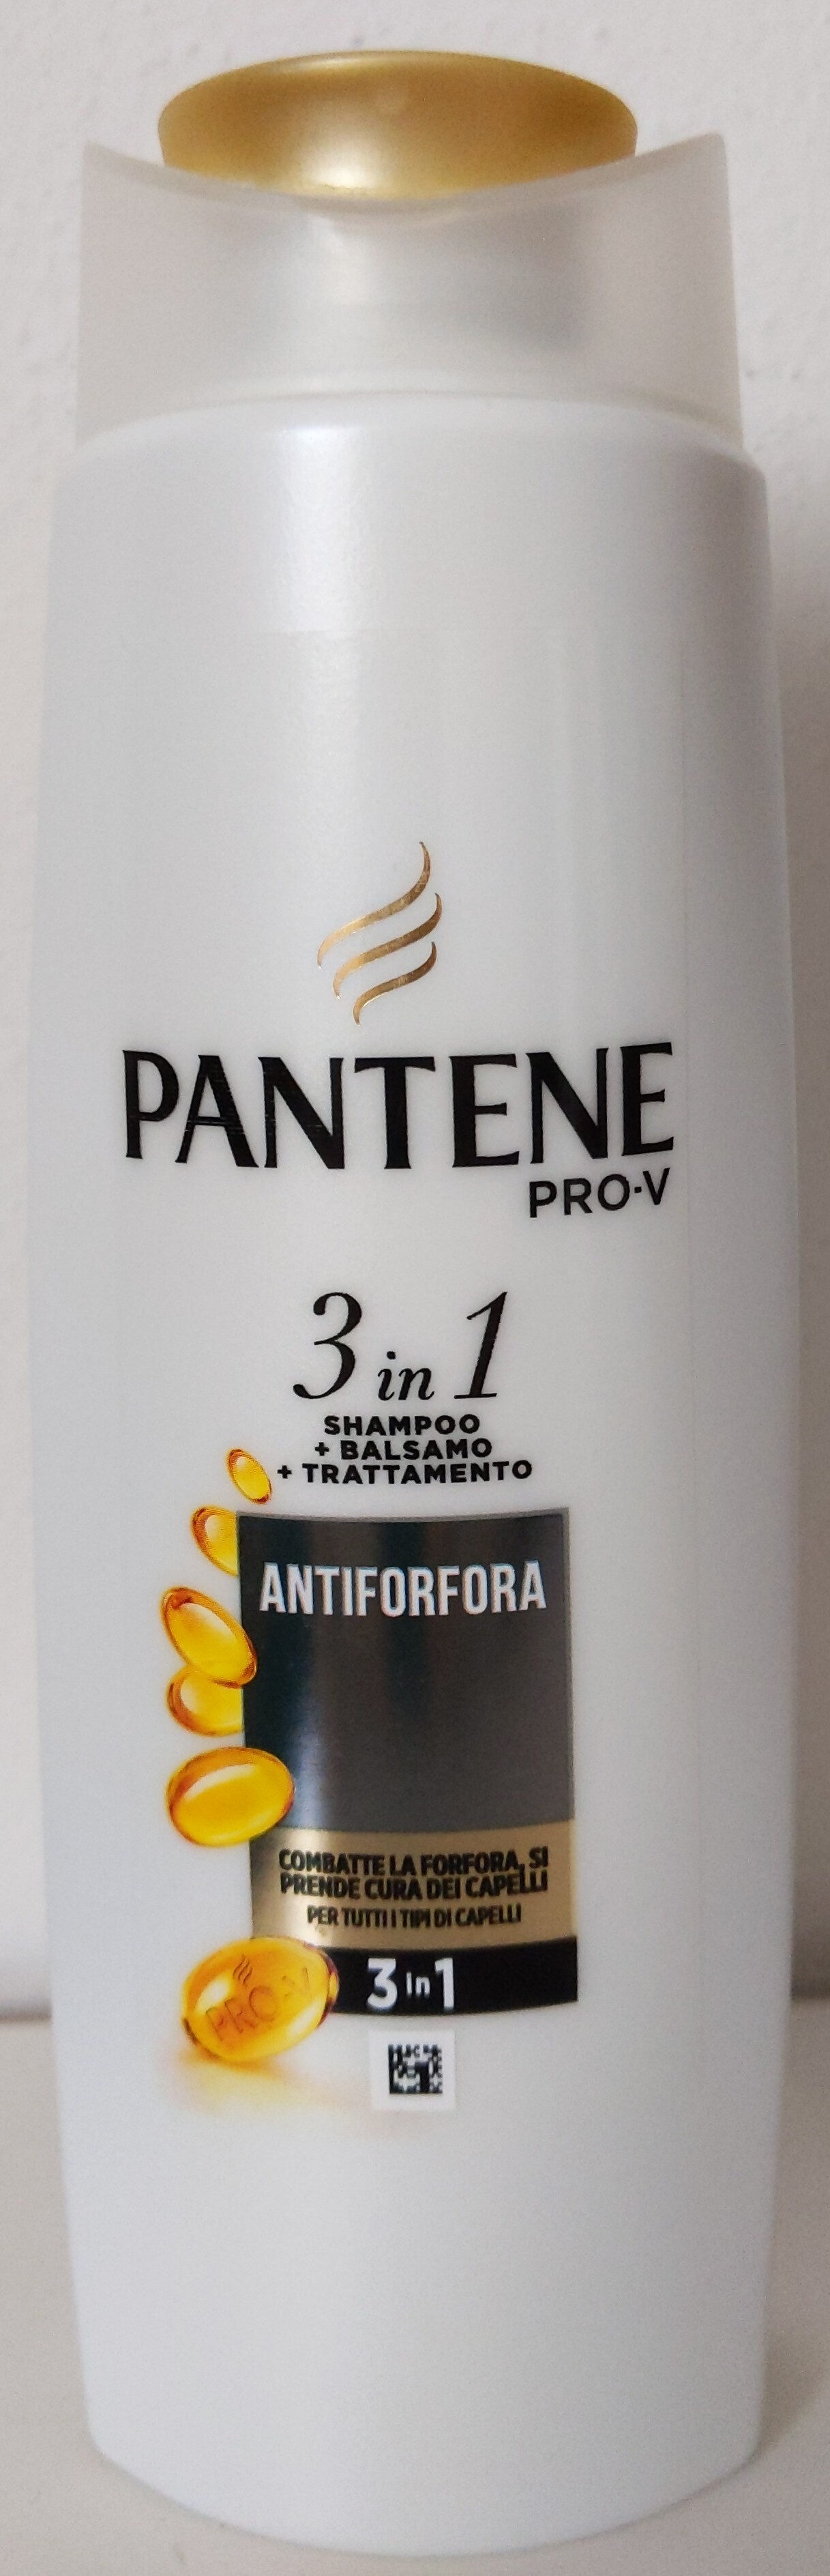 Pantene Pro-V 3 in 1 Shampoo + Balsamo + trattamento - Produit - it